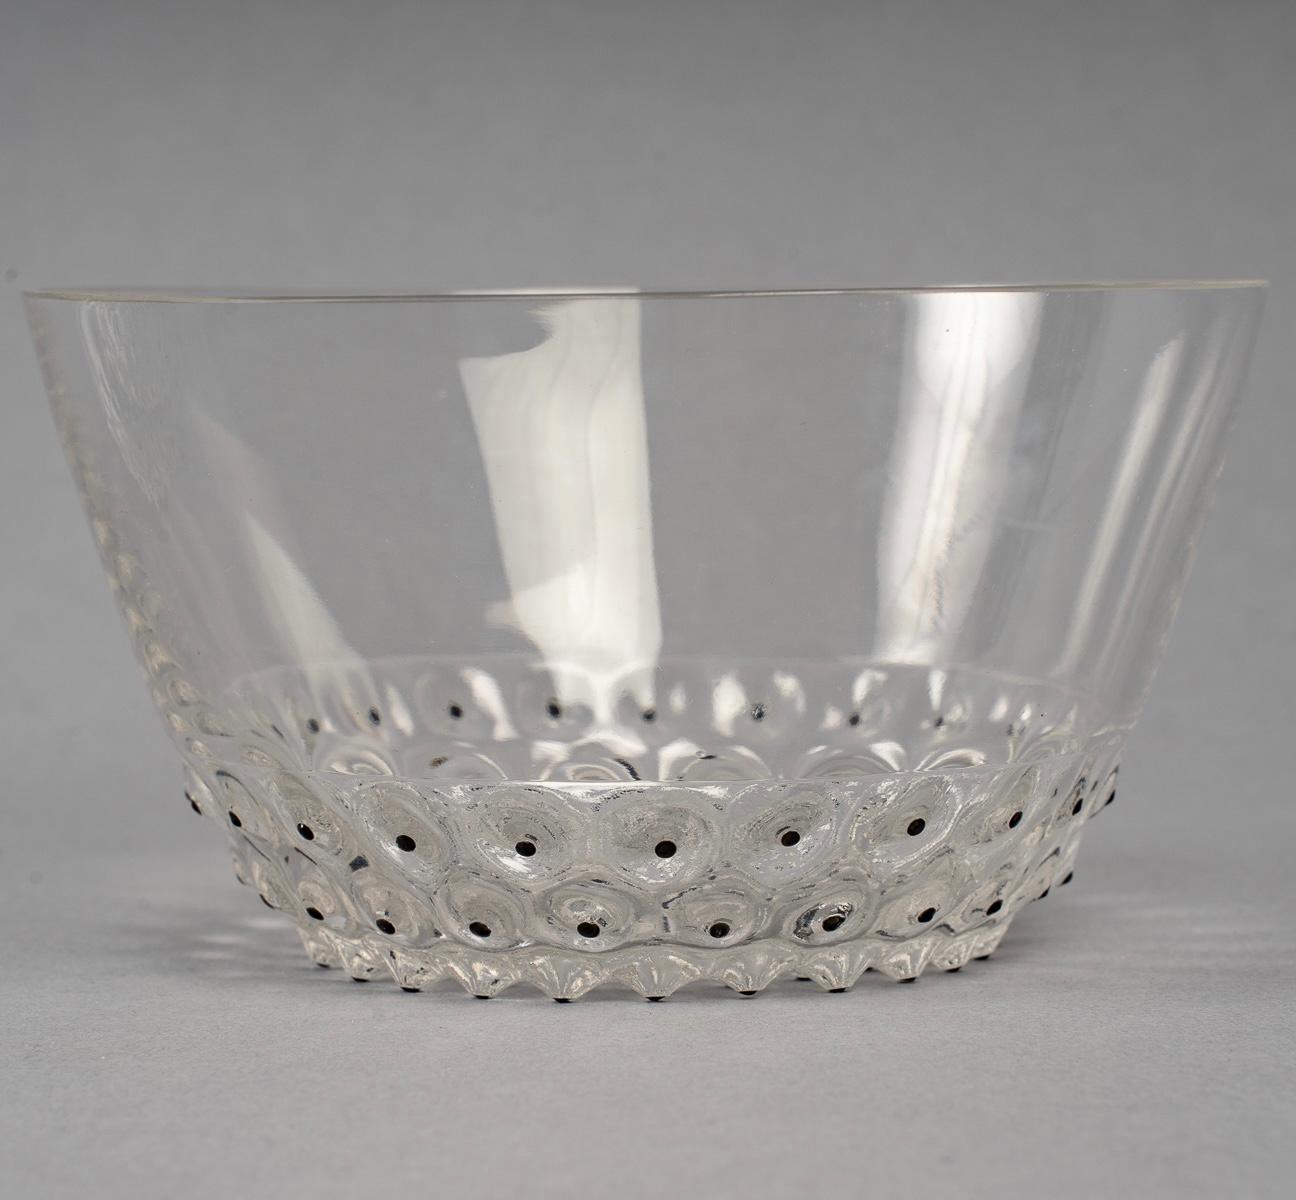 Molded 1934 René Lalique, Bowls Cups Cactus Clear Glass with Black Enamel, 3 Pieces For Sale